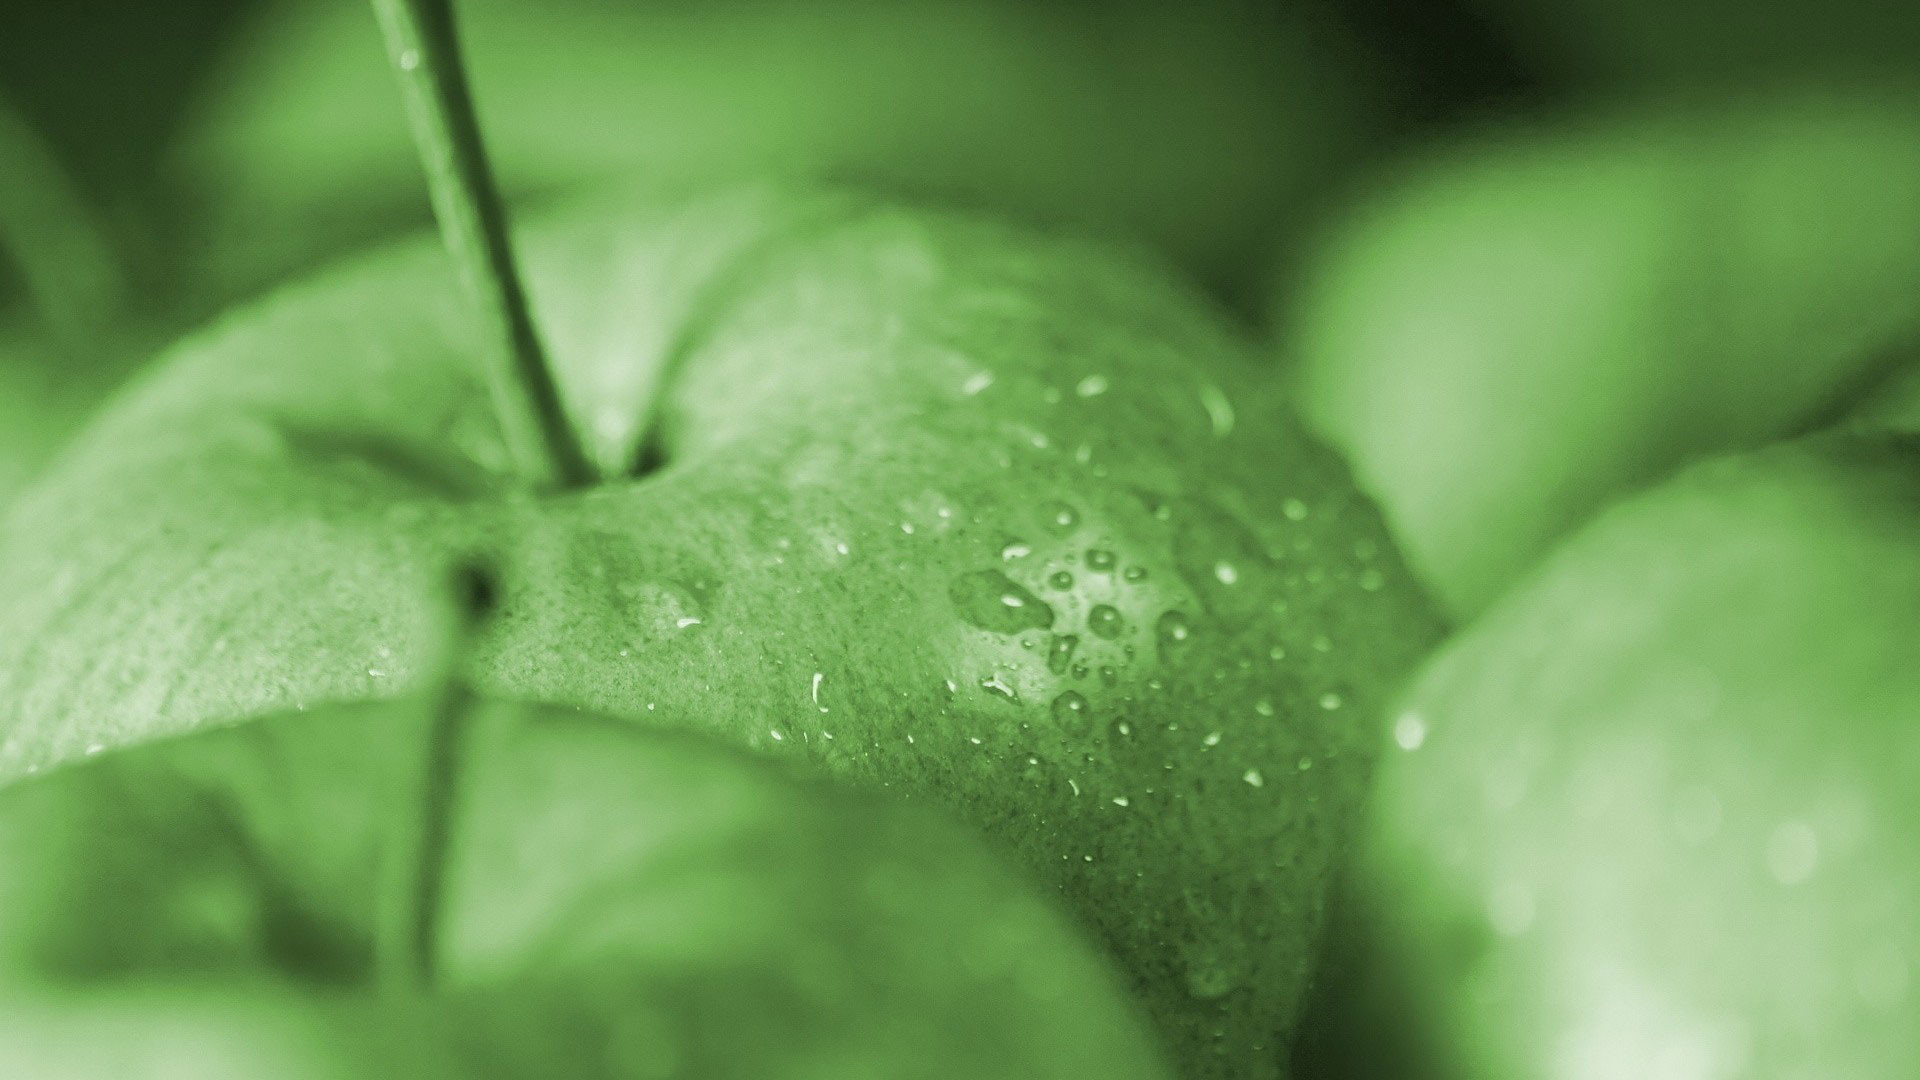 1920x1080 hd pics photos beautiful green apple water drops macro close up hd quality  desktop background wallpaper